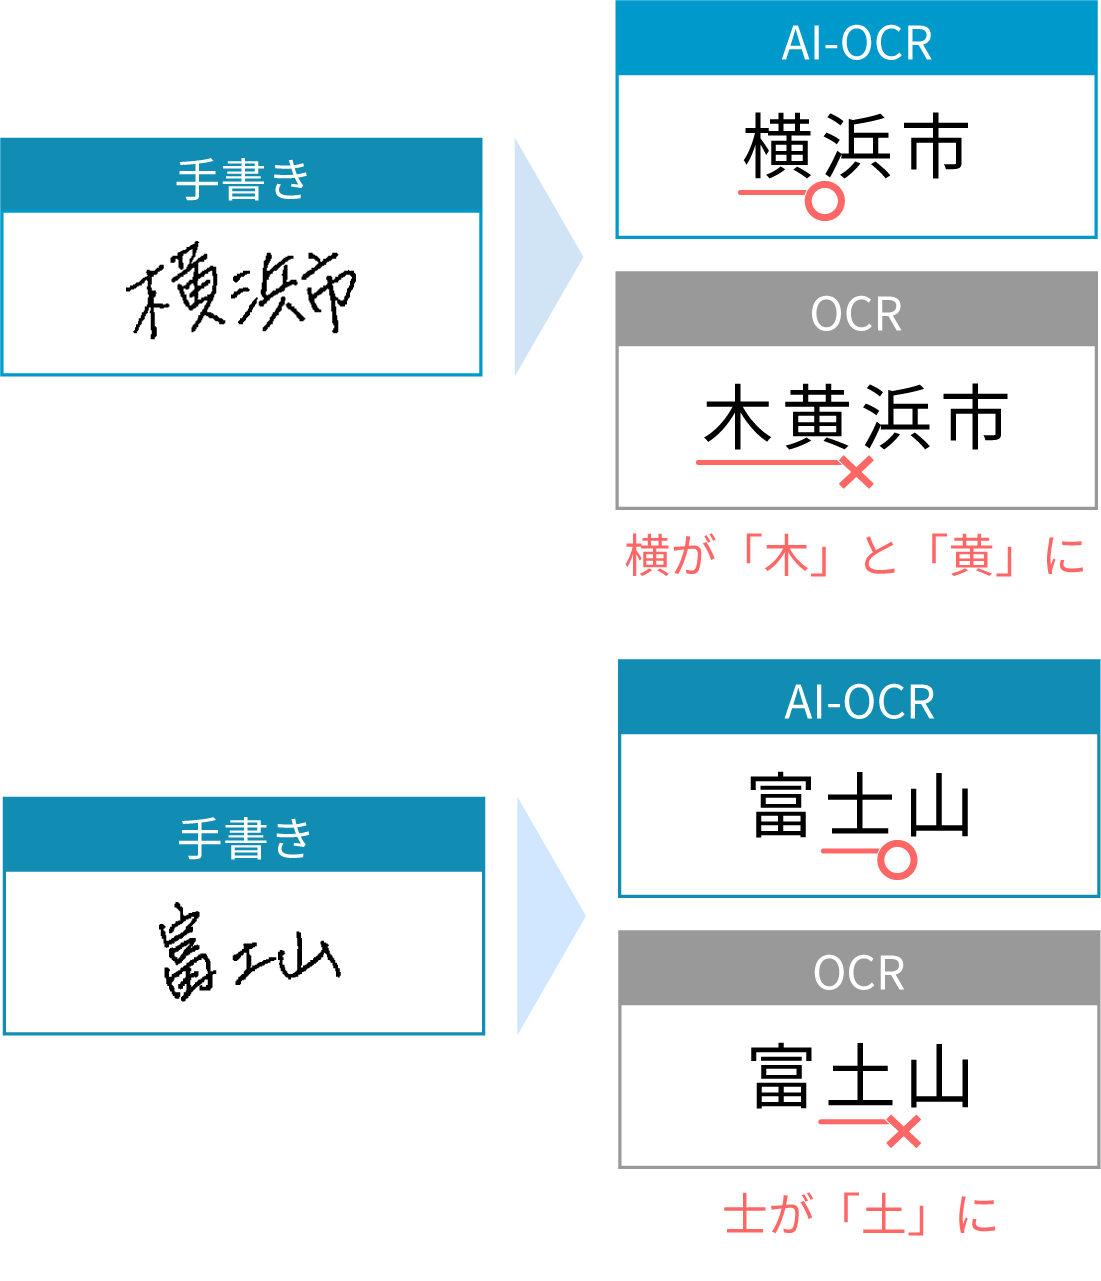 OCRとAI-OCRの手書き文字の認識結果の違いを示した画像